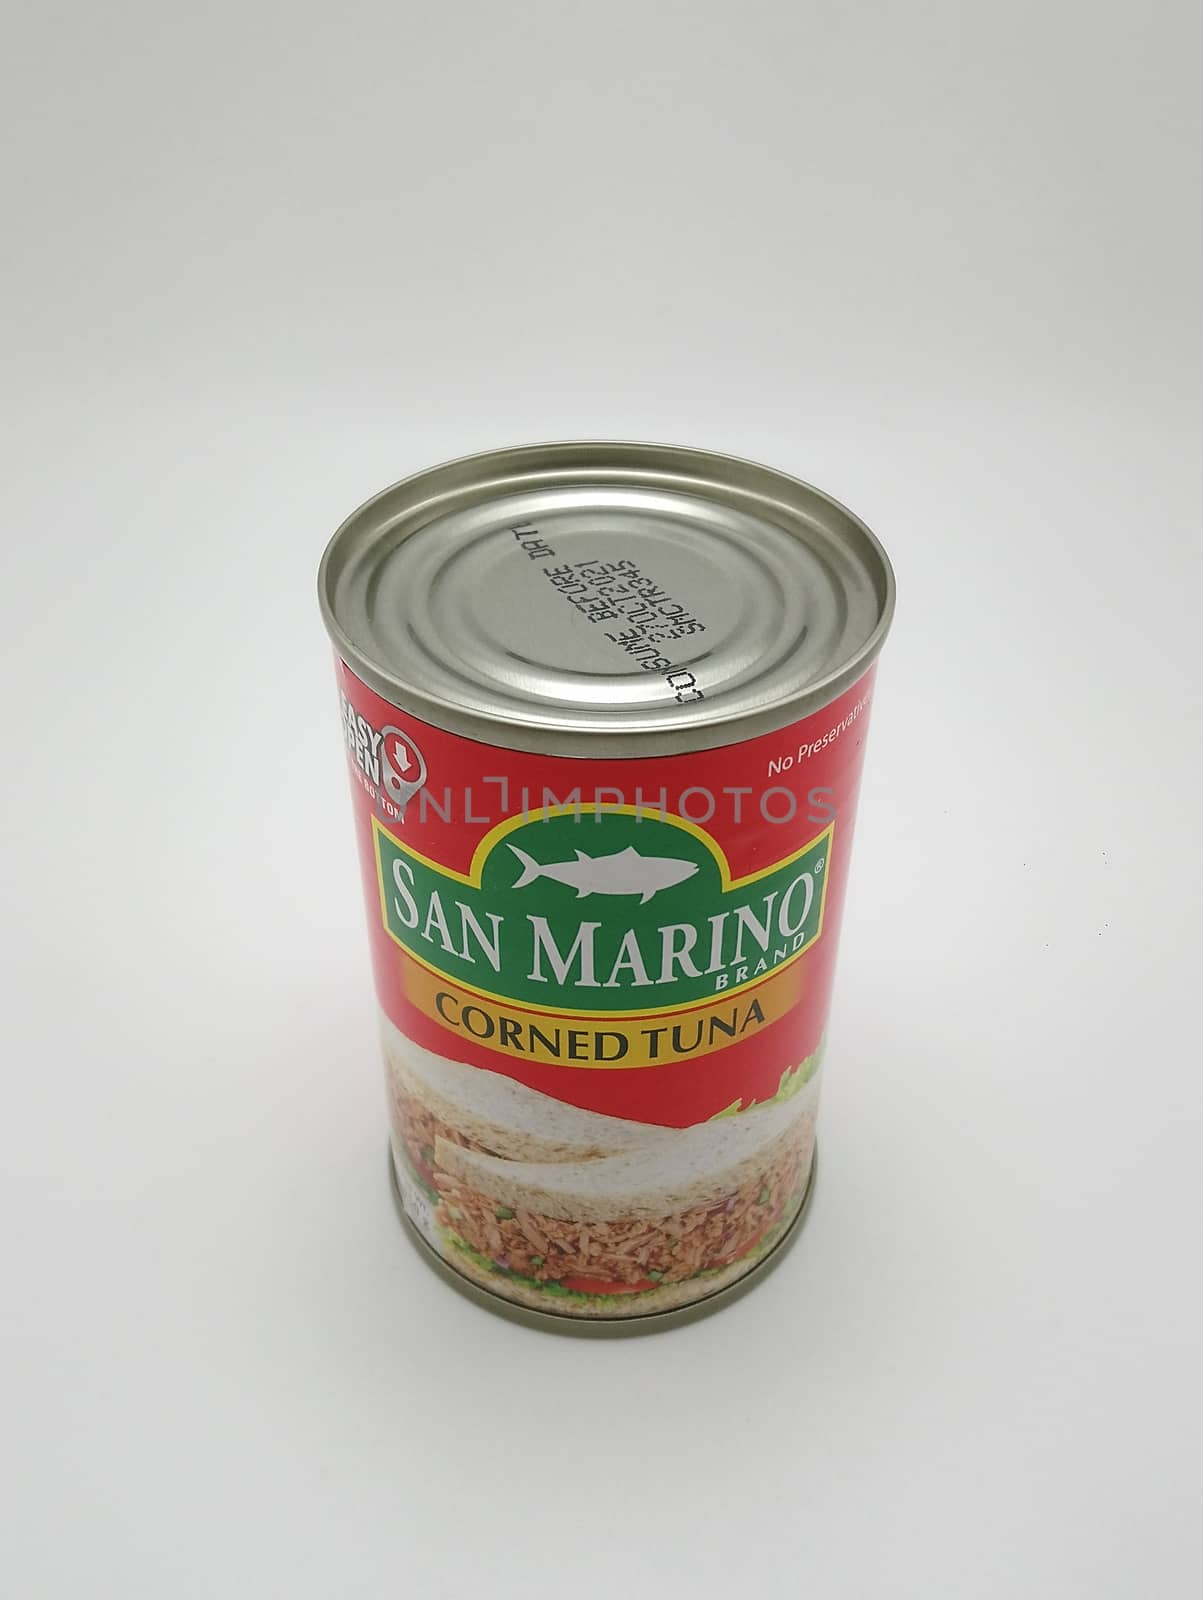 San marino corned tuna in Manila, Philippines by imwaltersy